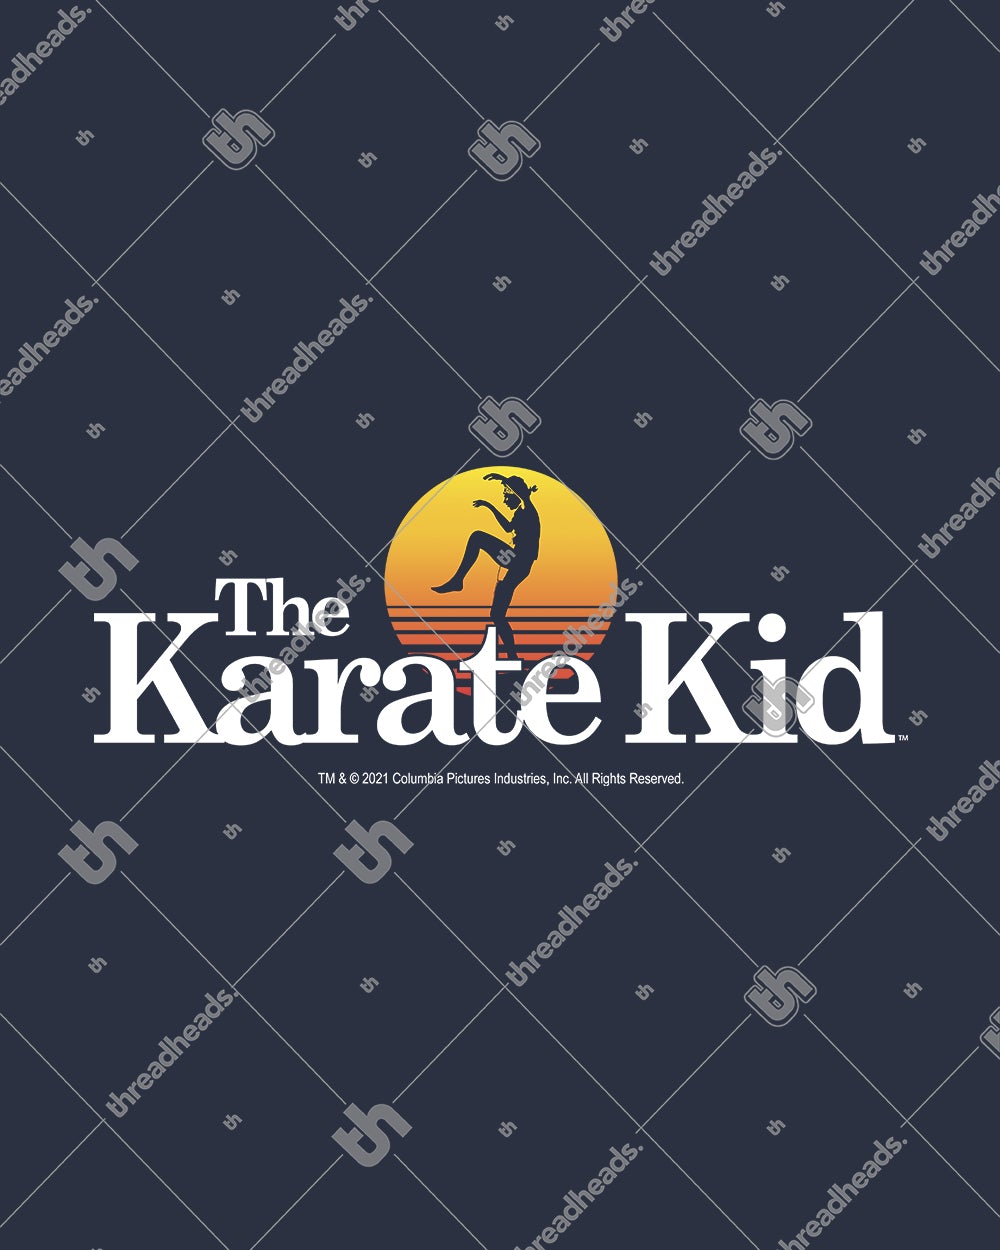 Karate Kid Logo Tank Australia Online #colour_navy